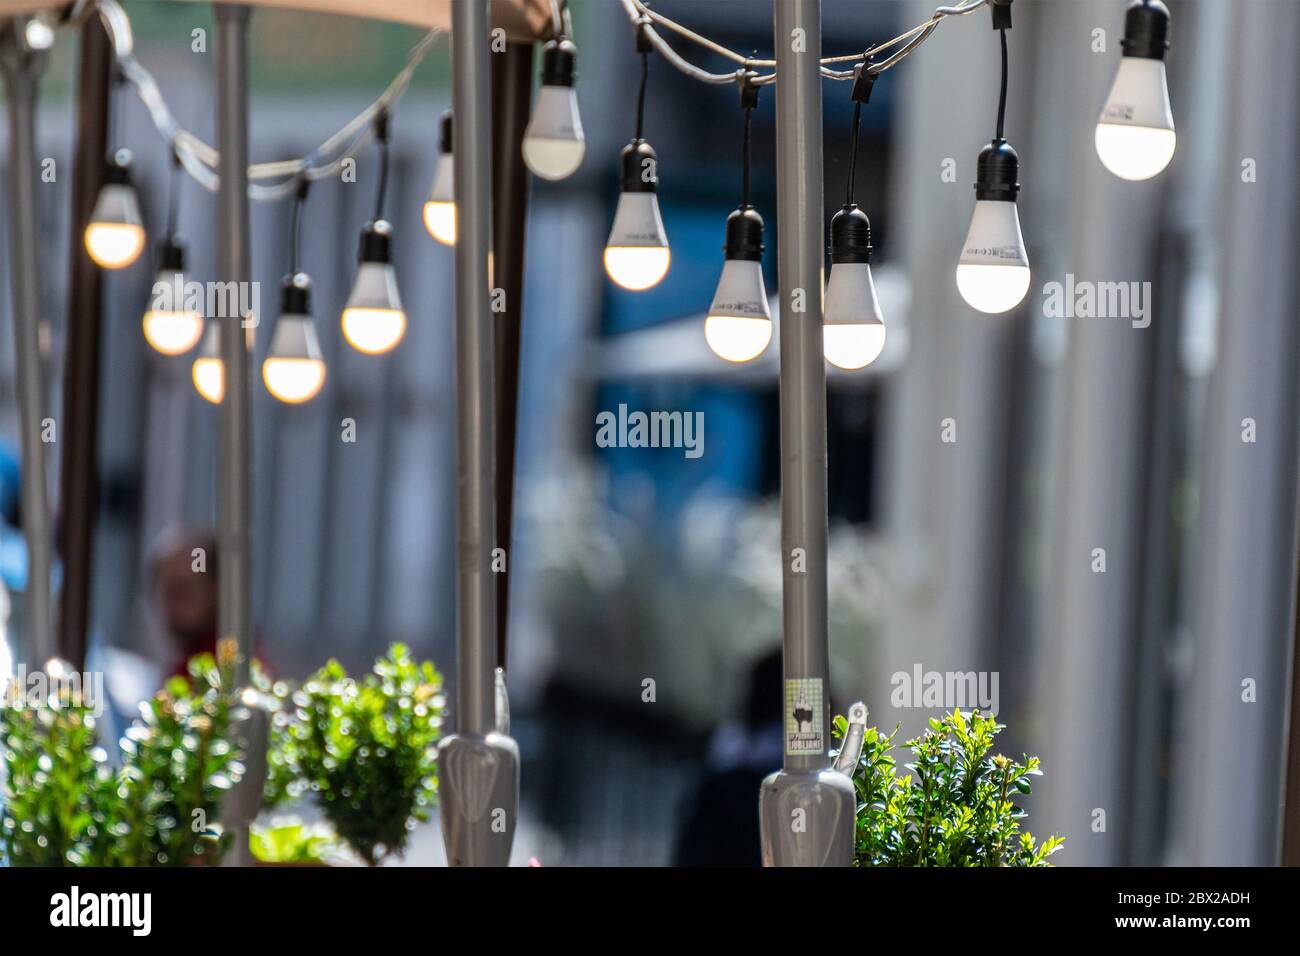 Lámparas LED modernas en un cable. Iluminación de restaurante al aire  libre. Decoración sencilla con iluminación Fotografía de stock - Alamy